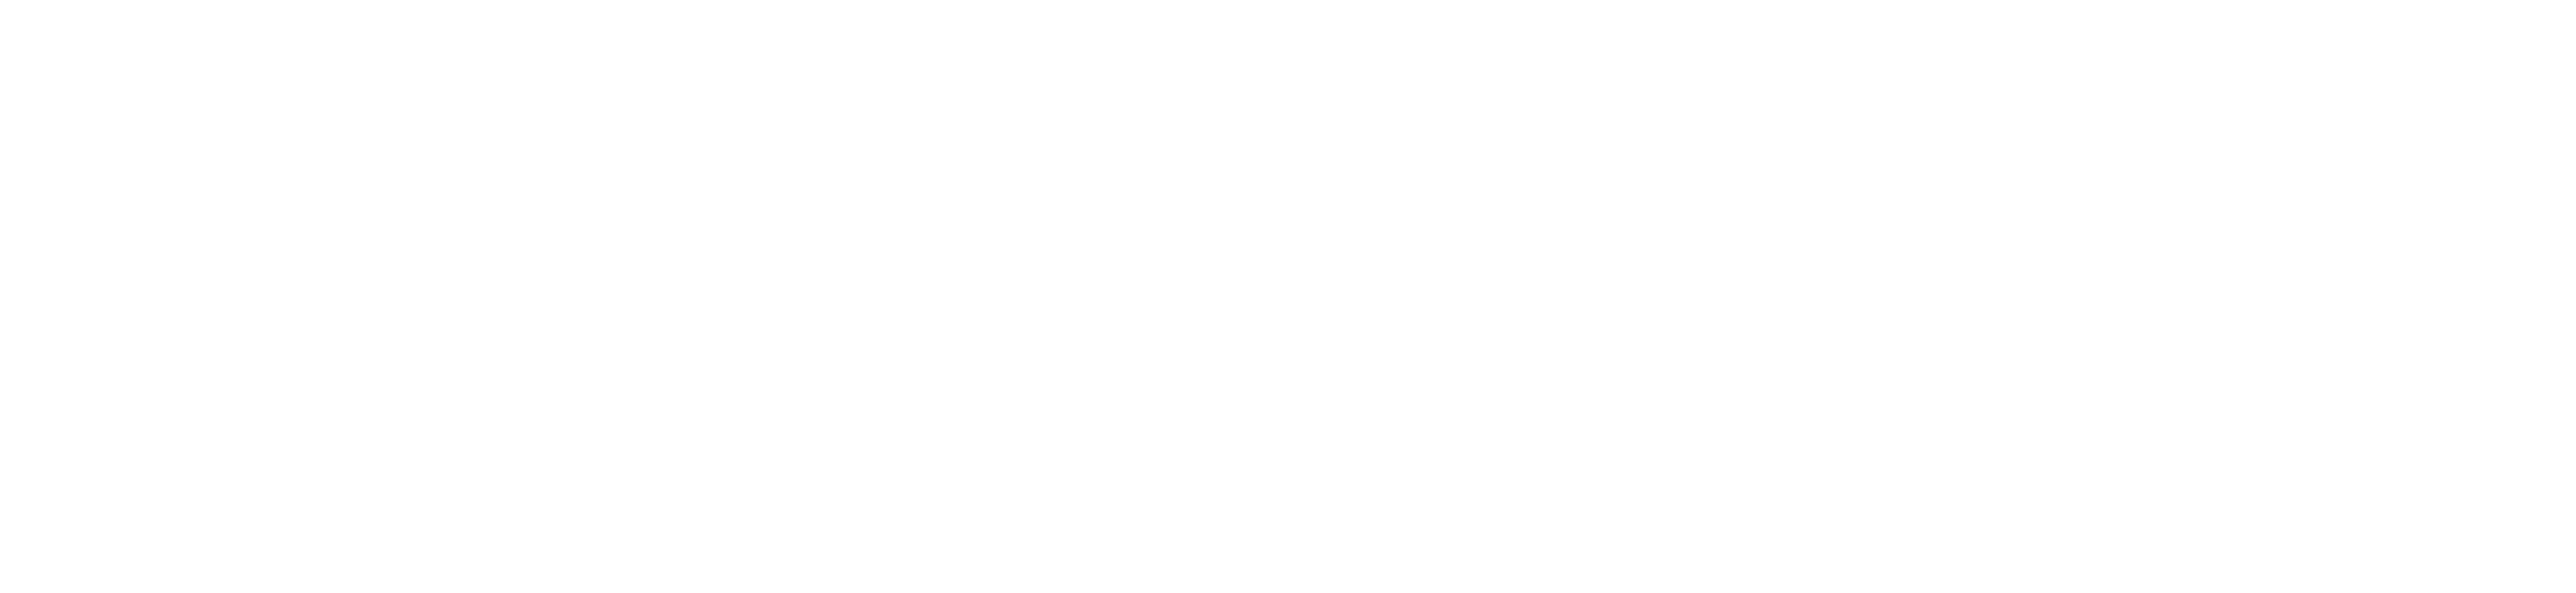 National Advisor Bureau